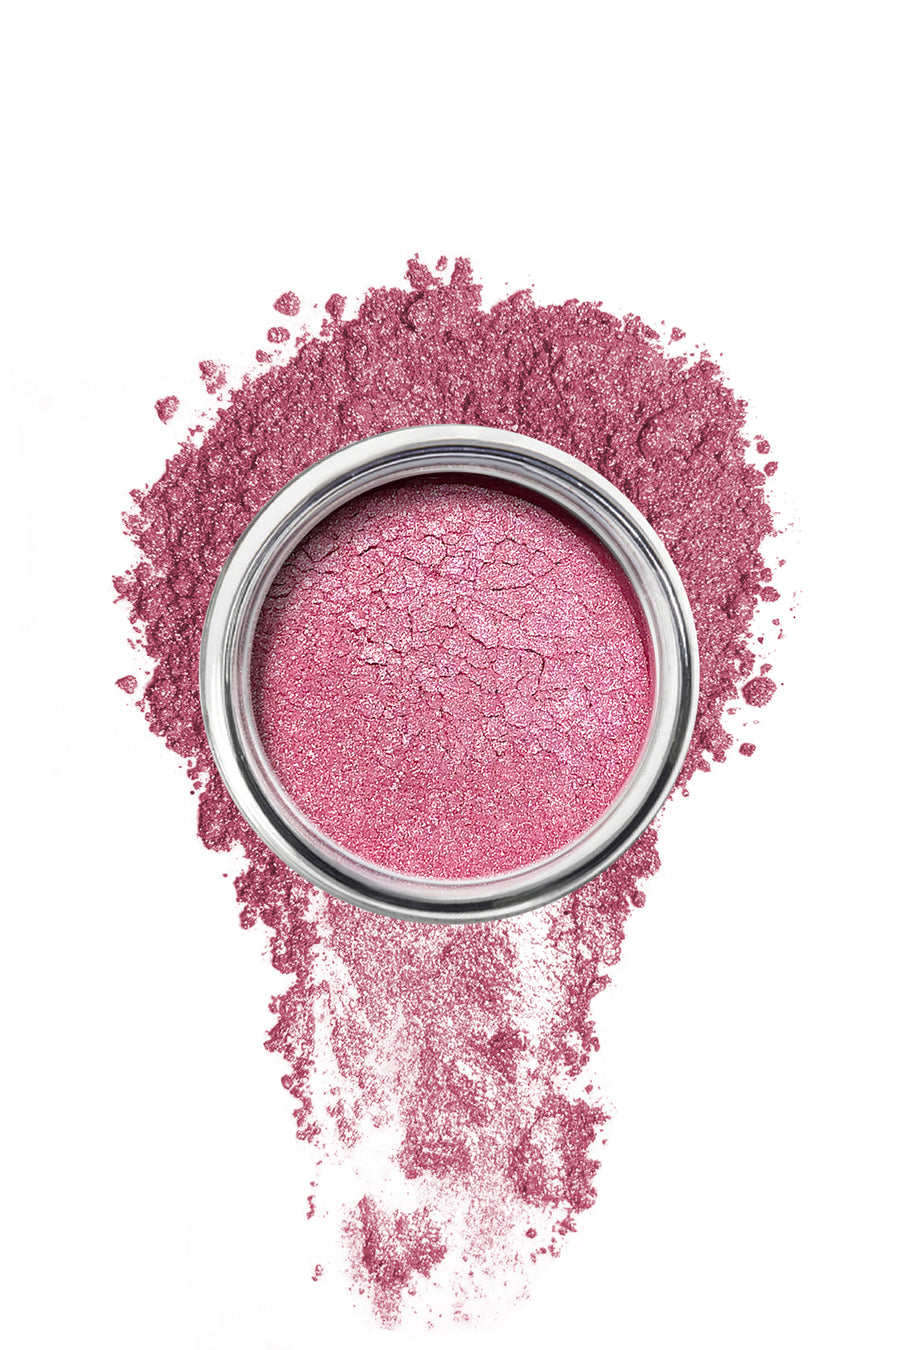 Shimmer Eyeshadow #1 - Deep Rose Gold - Blend Mineral Cosmetics